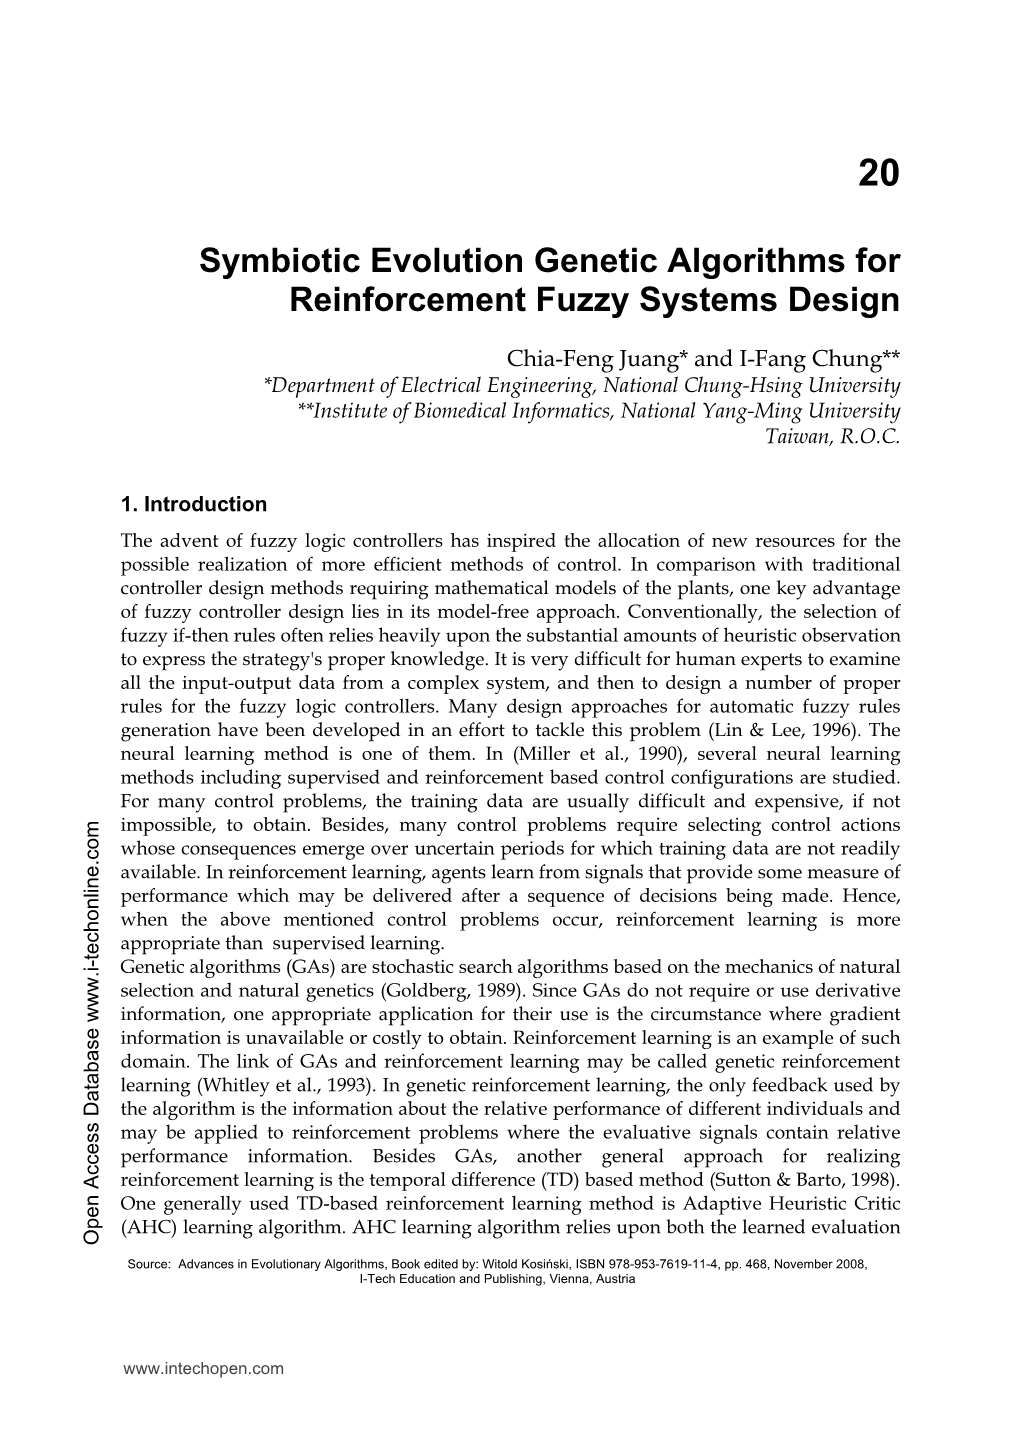 Symbiotic Evolution Genetic Algorithms for Reinforcement Fuzzy Systems Design